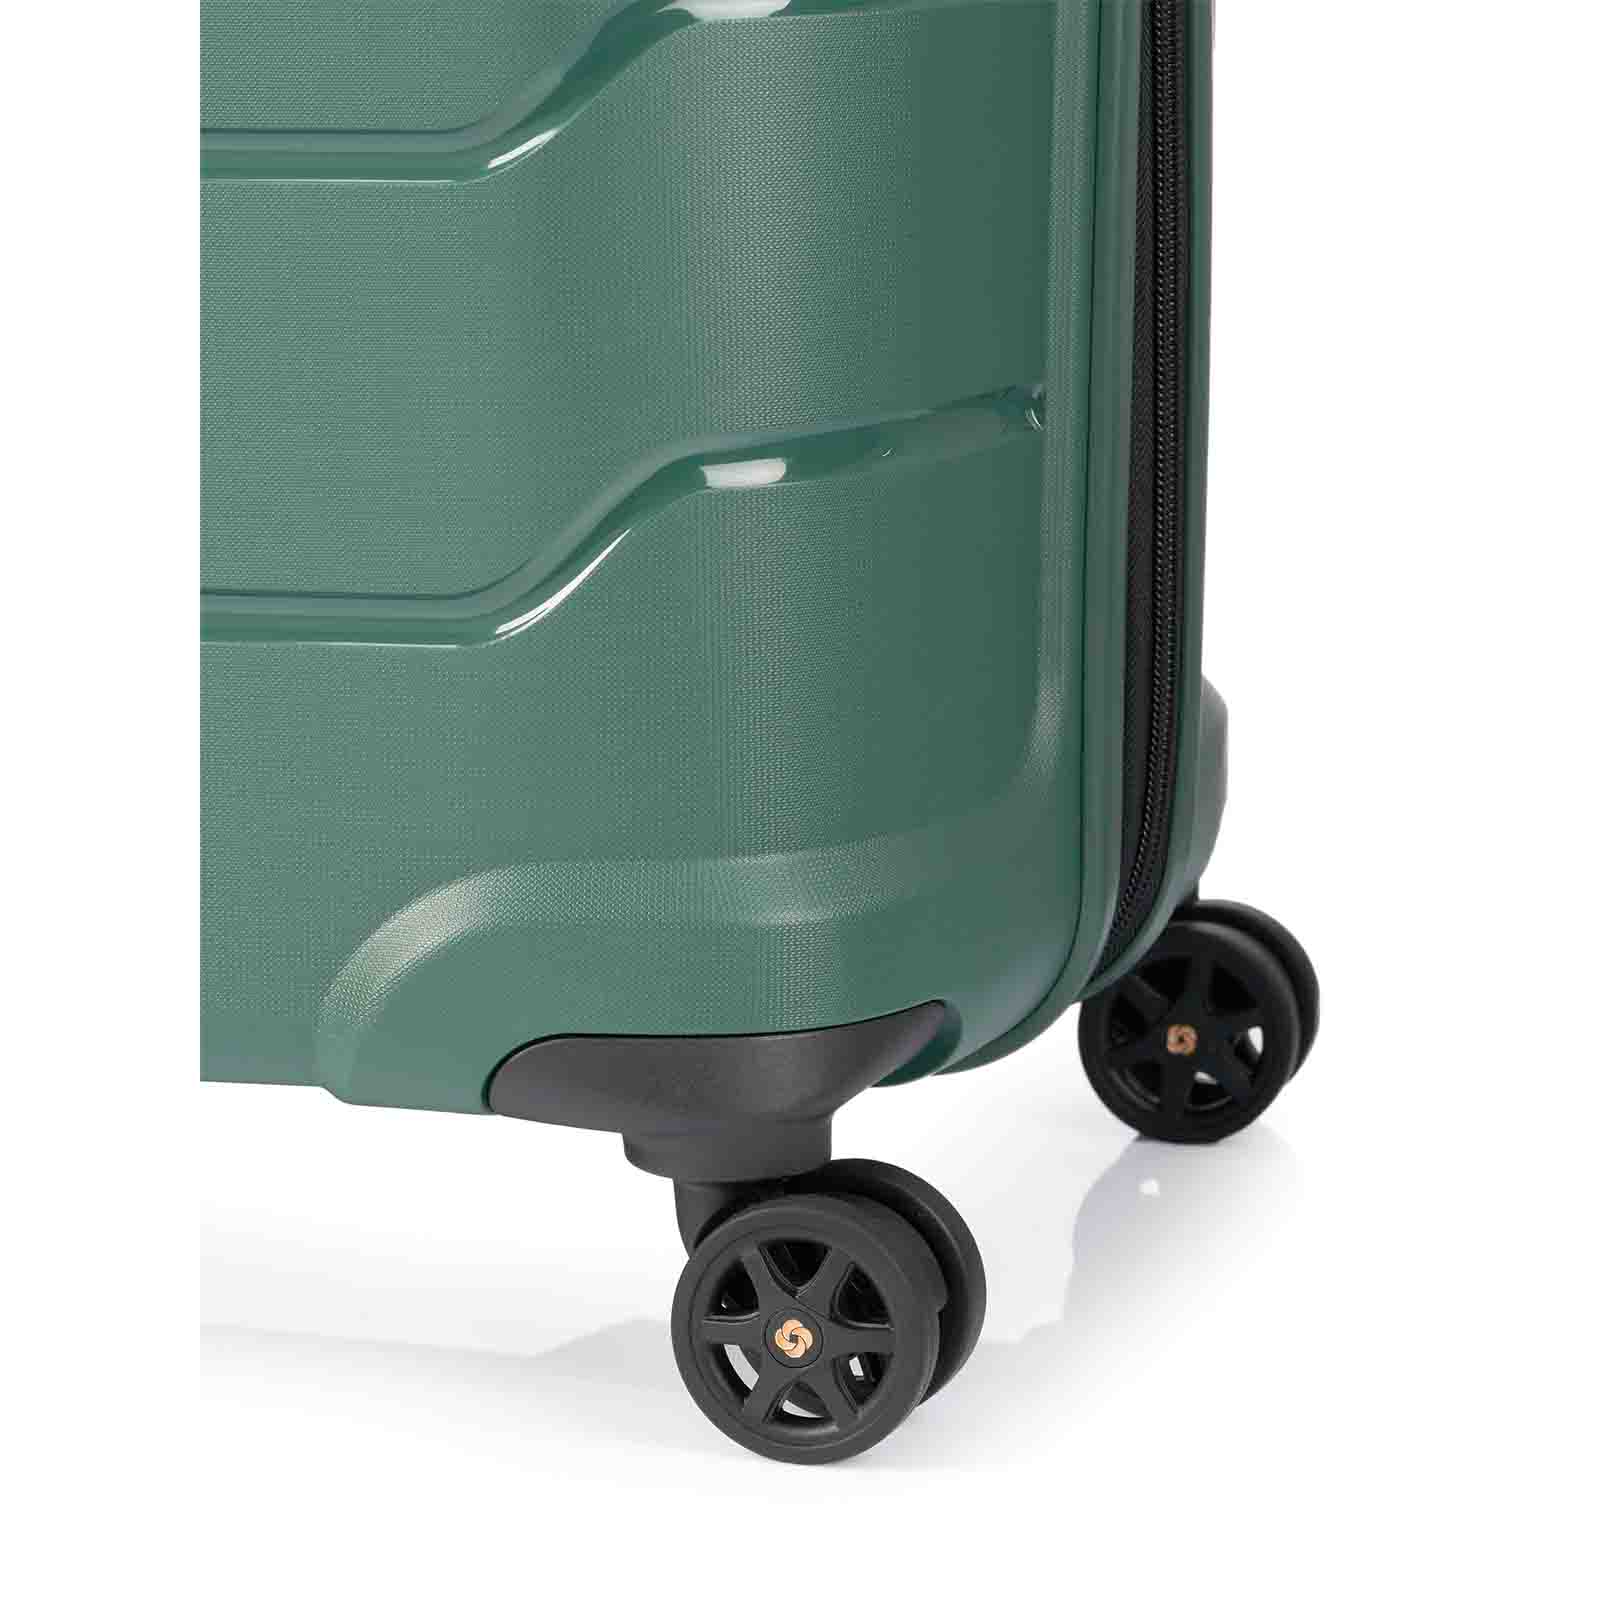 Samsonite-Oc2lite-81cm-Suitcase-Urban-Green-Wheels